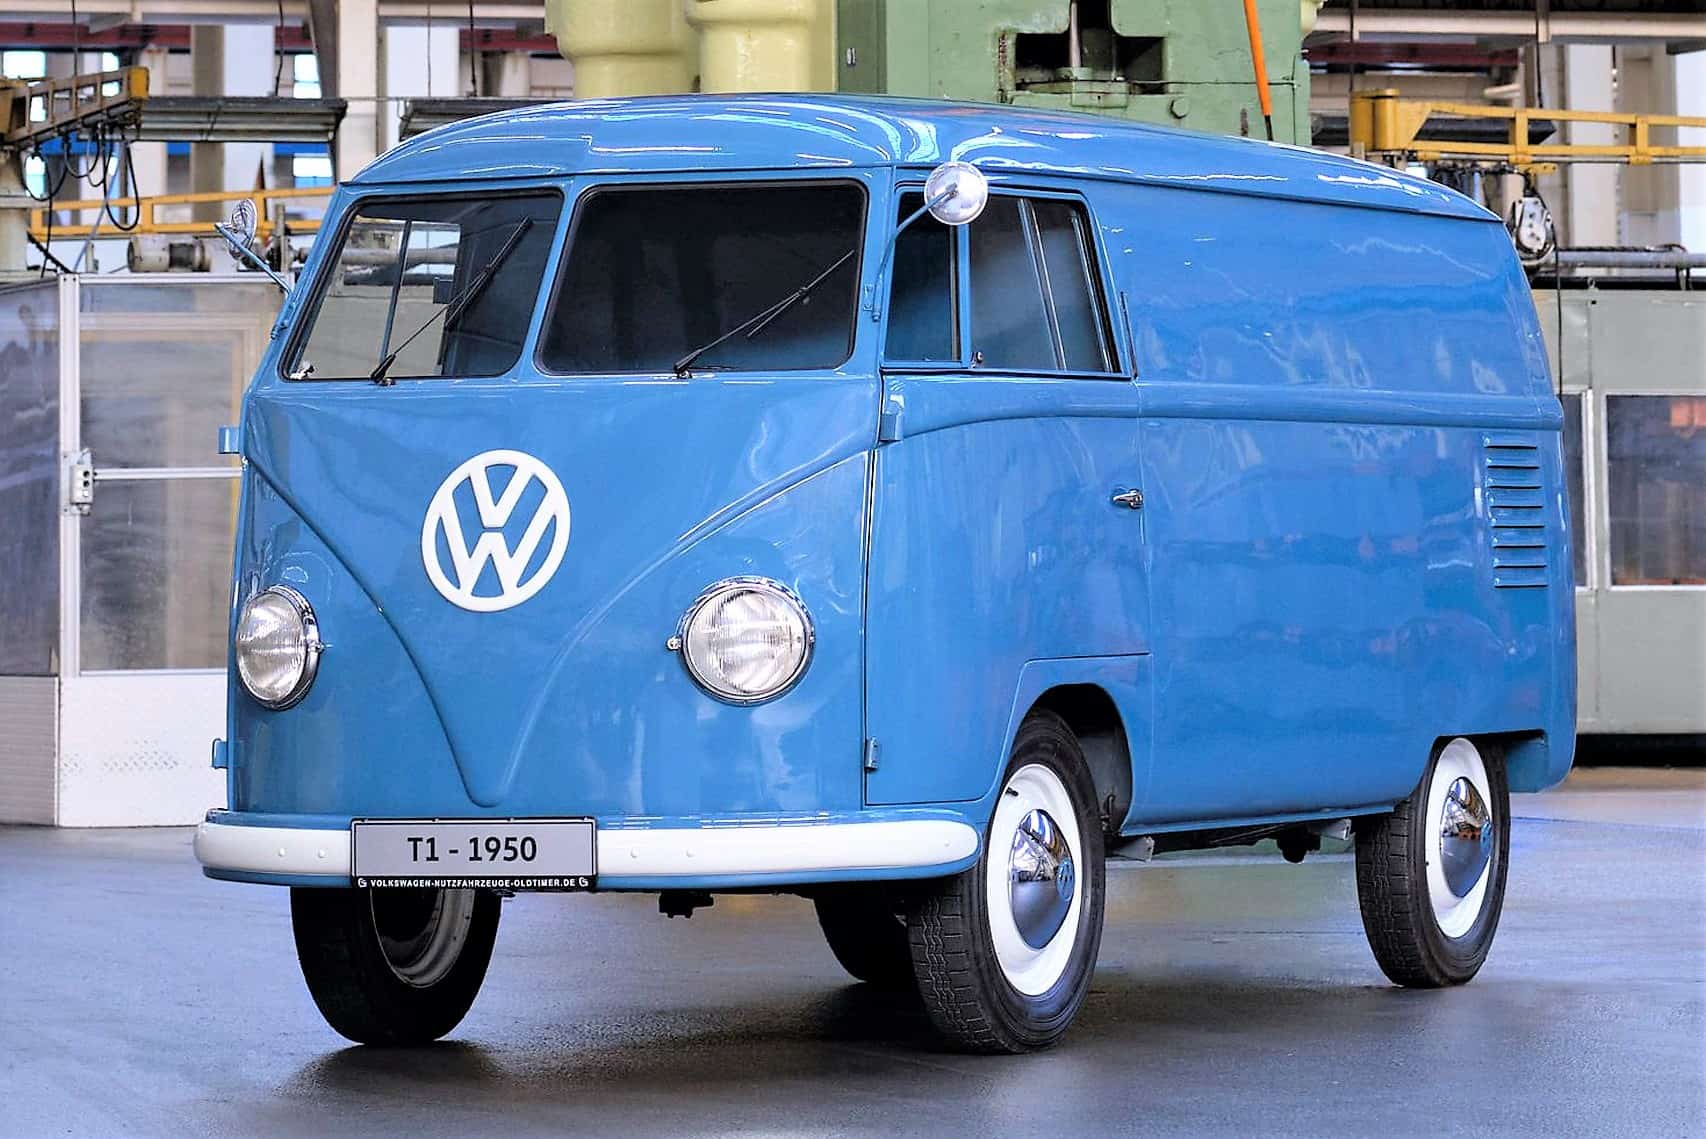 Oldest-known Volkswagen Transporter marked 70th birthday this year